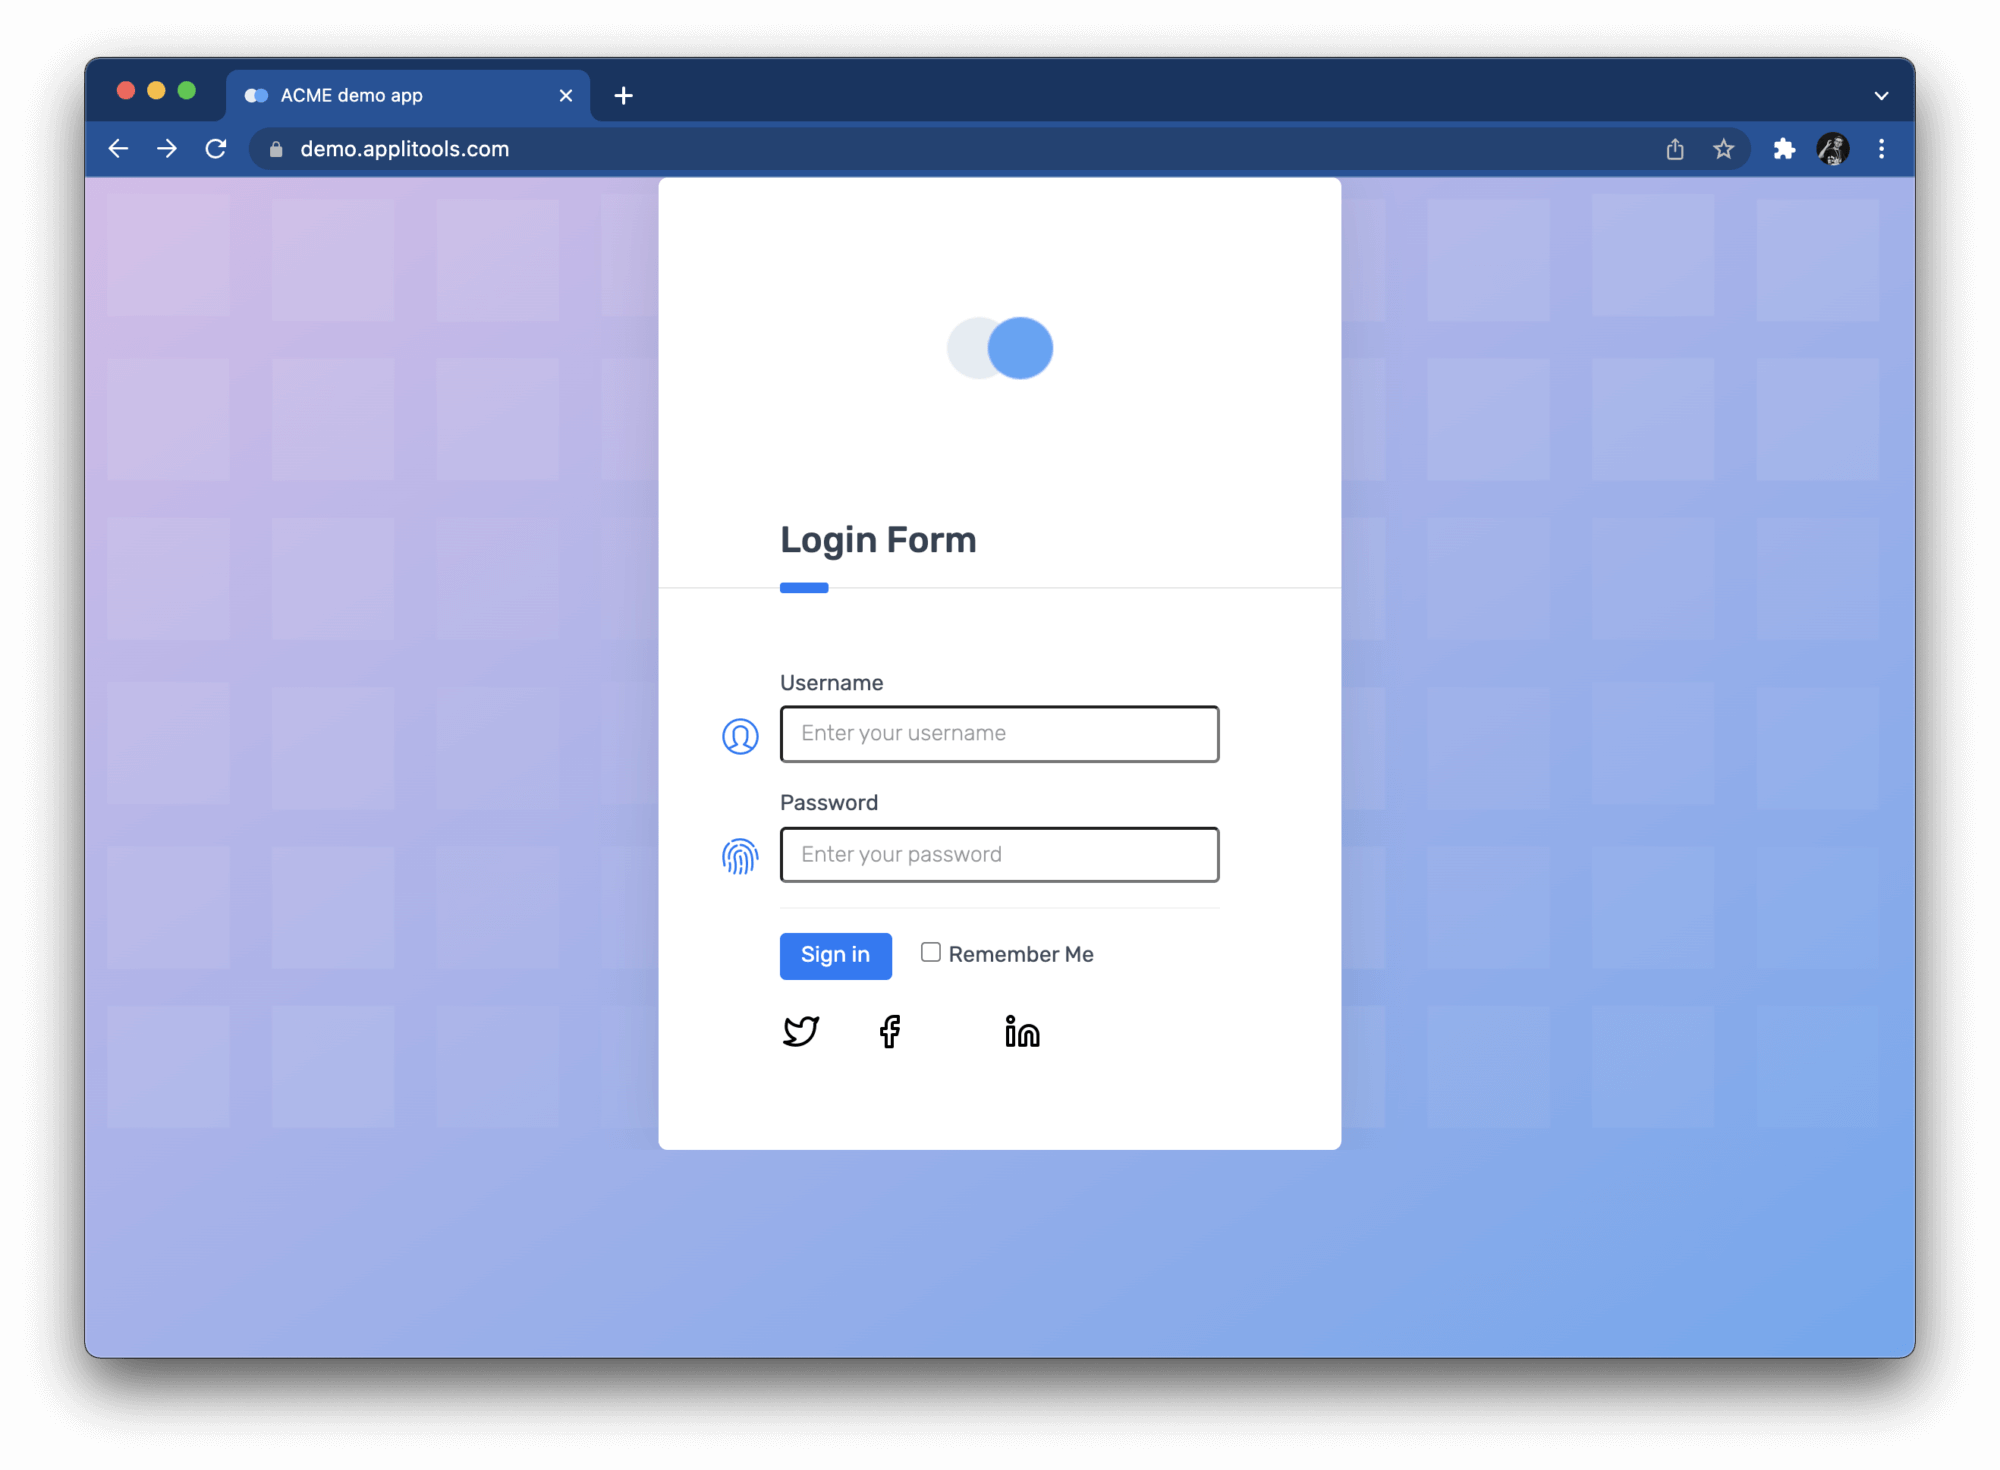 Demo login form including logo, username and password.